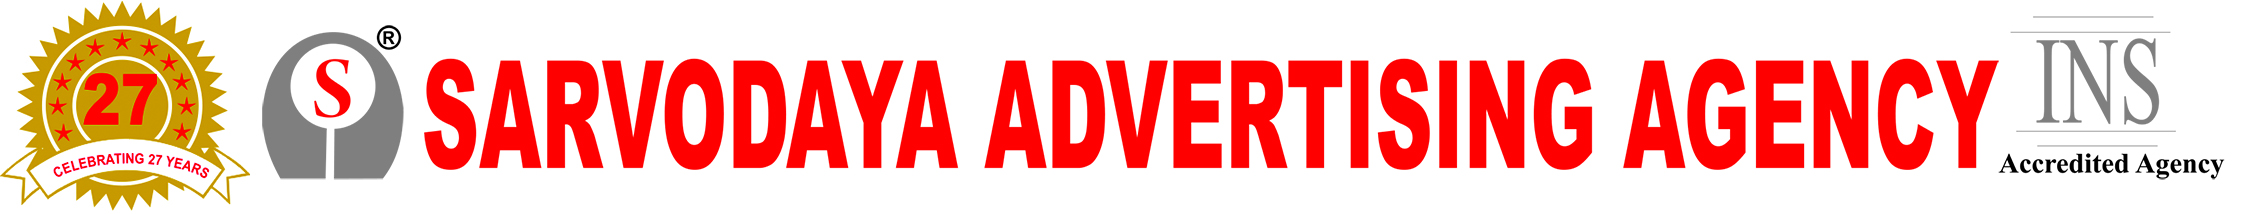 Sarvodaya advertising agency